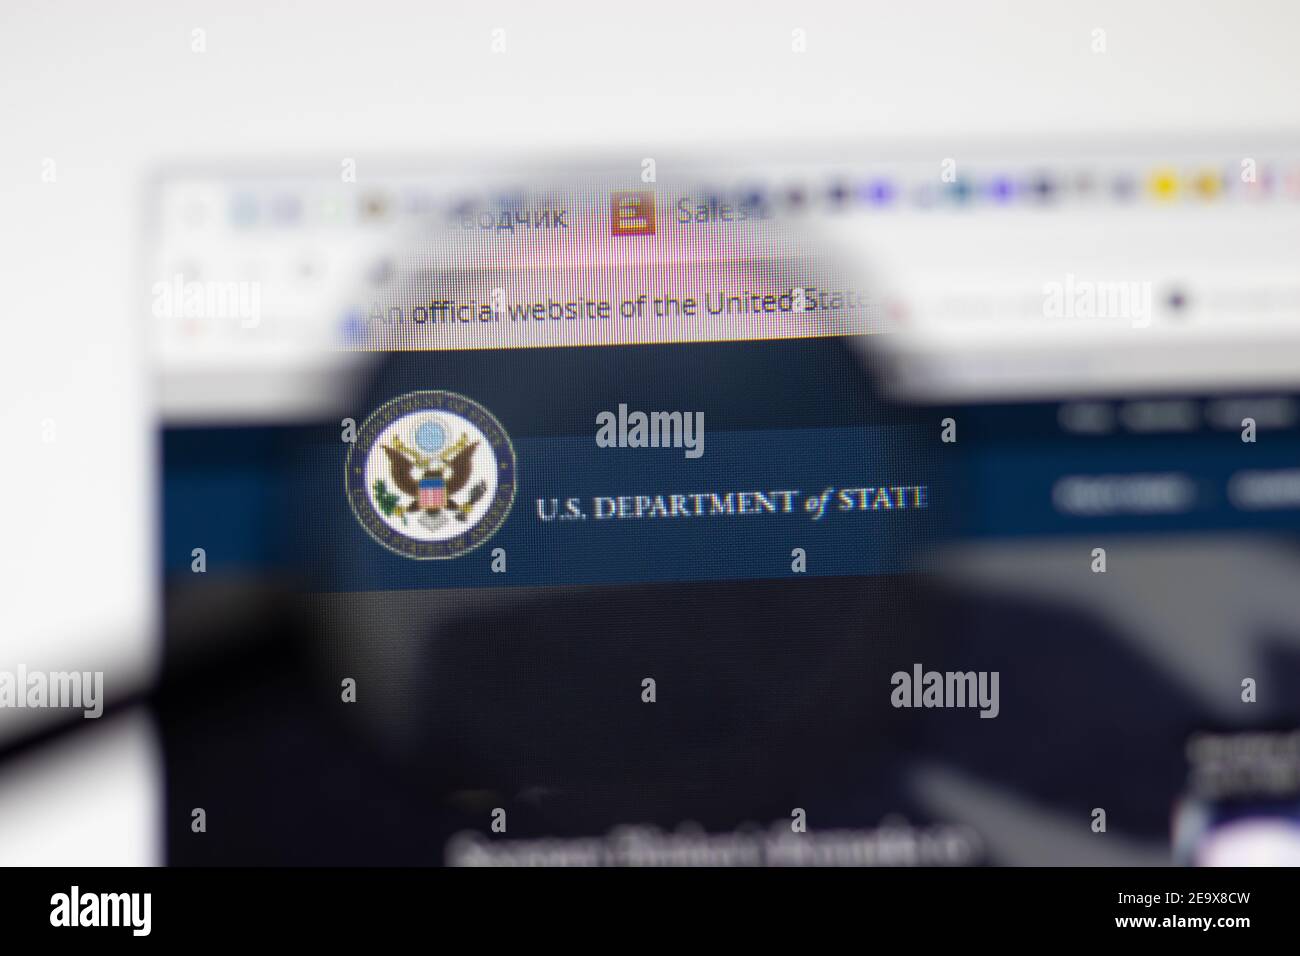 Los Angeles, USA - 1. Februar 2021: WEBSITE DES US-Außenministeriums. State.gov Logo auf dem Display, illustrative Editorial Stockfoto